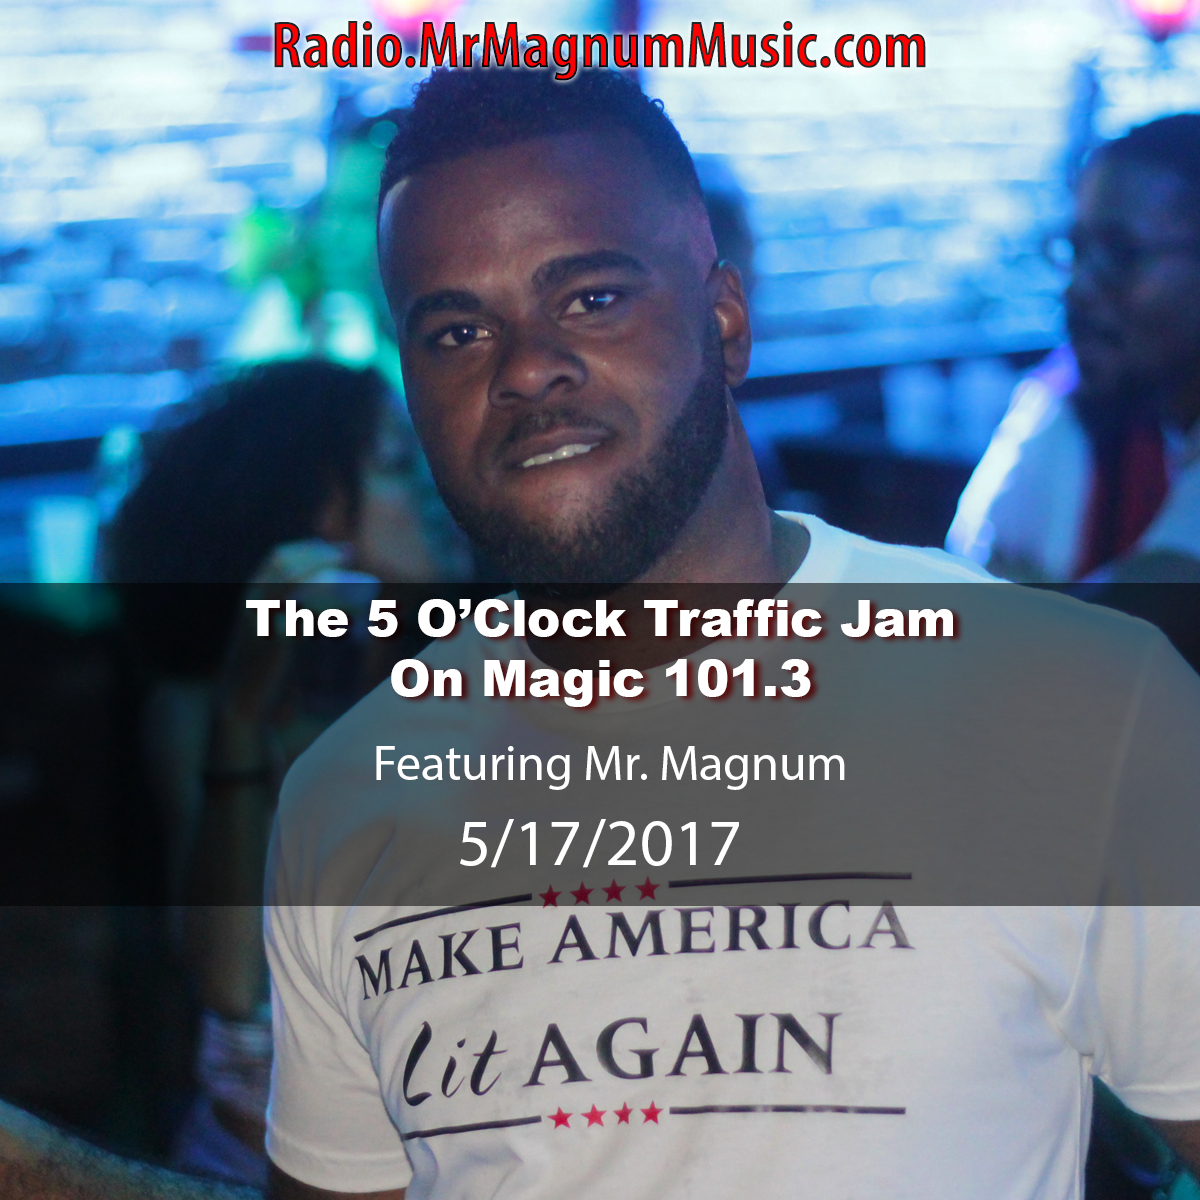 The 5 O'Clock Traffic Jam 20170517 featuring Gainesville's #1 DJ, Mr. Magnum on Magic 101.3